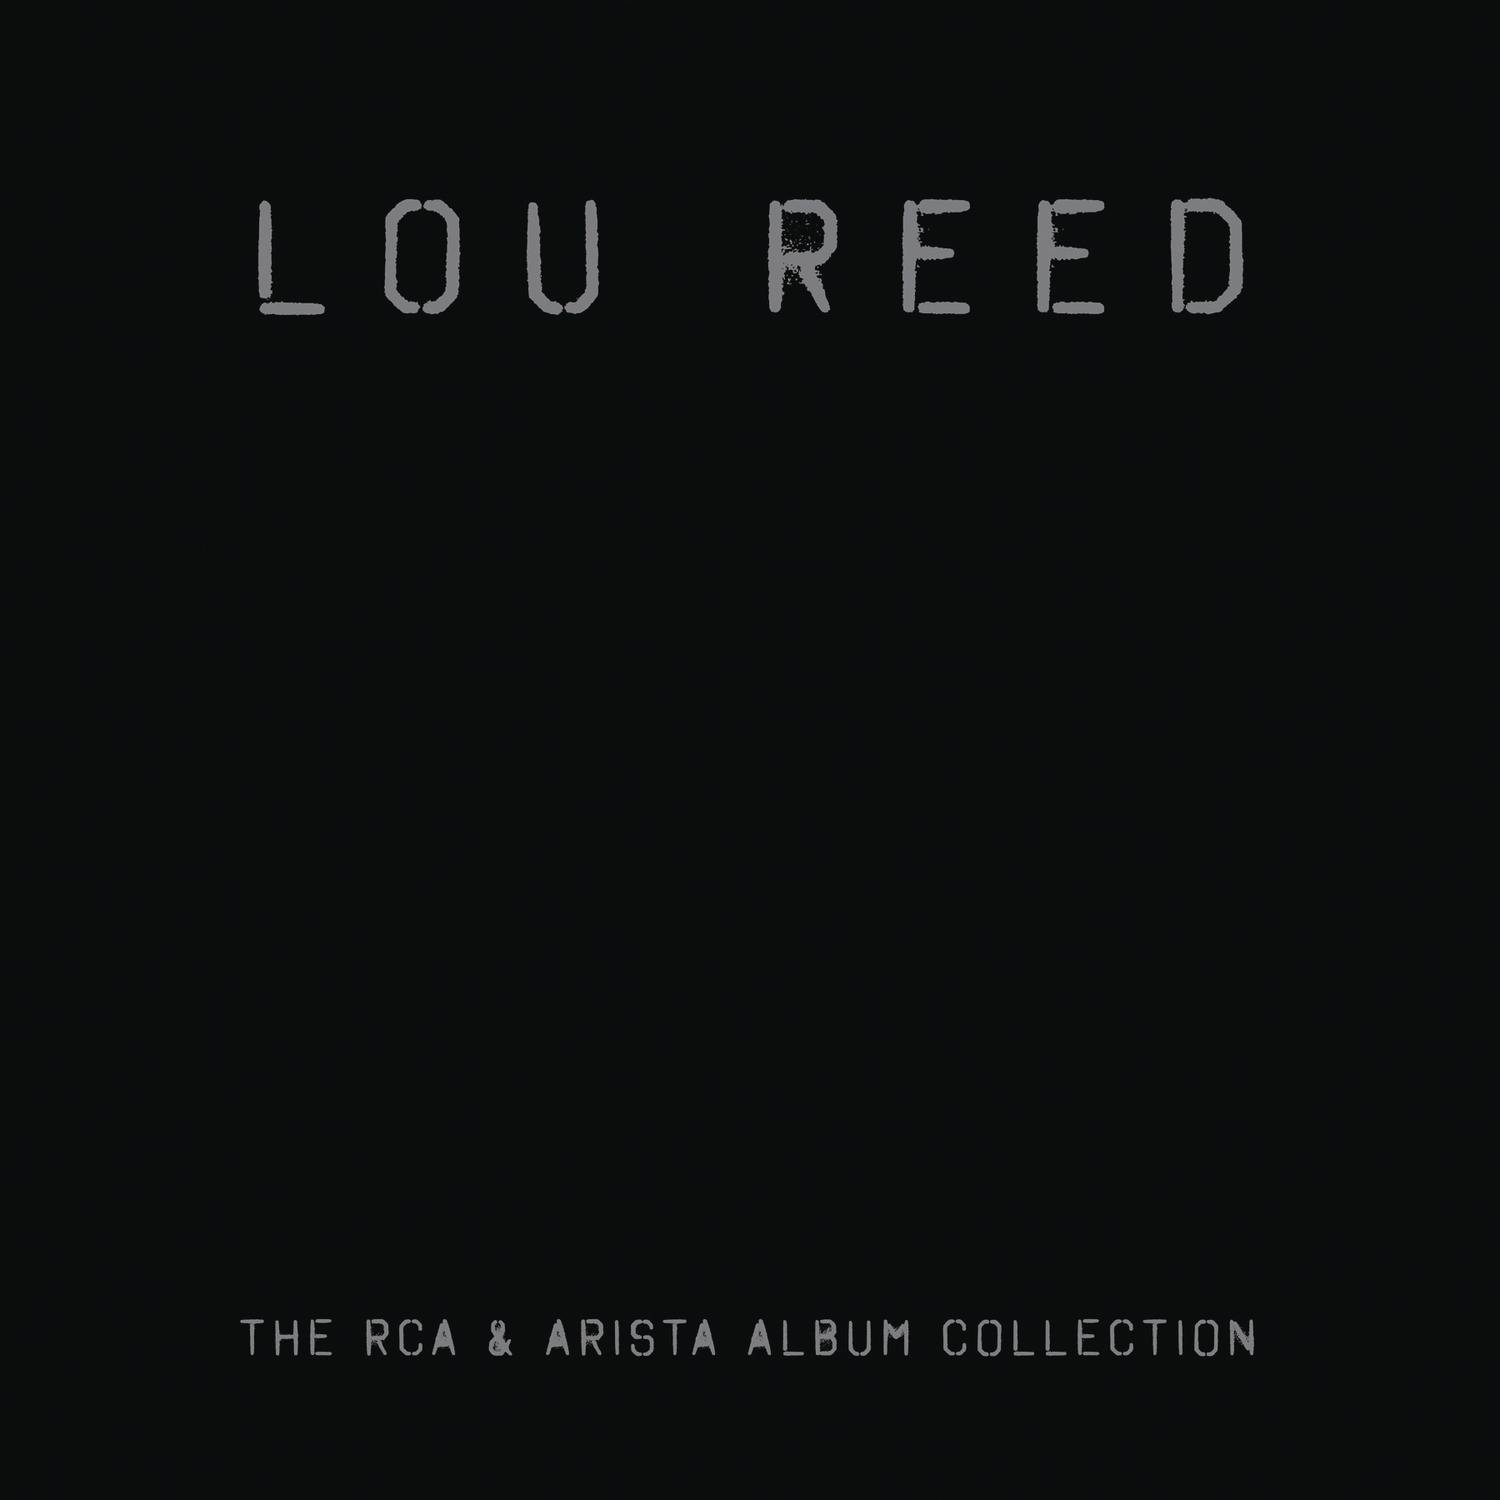 The RCA & Arista Album Collection